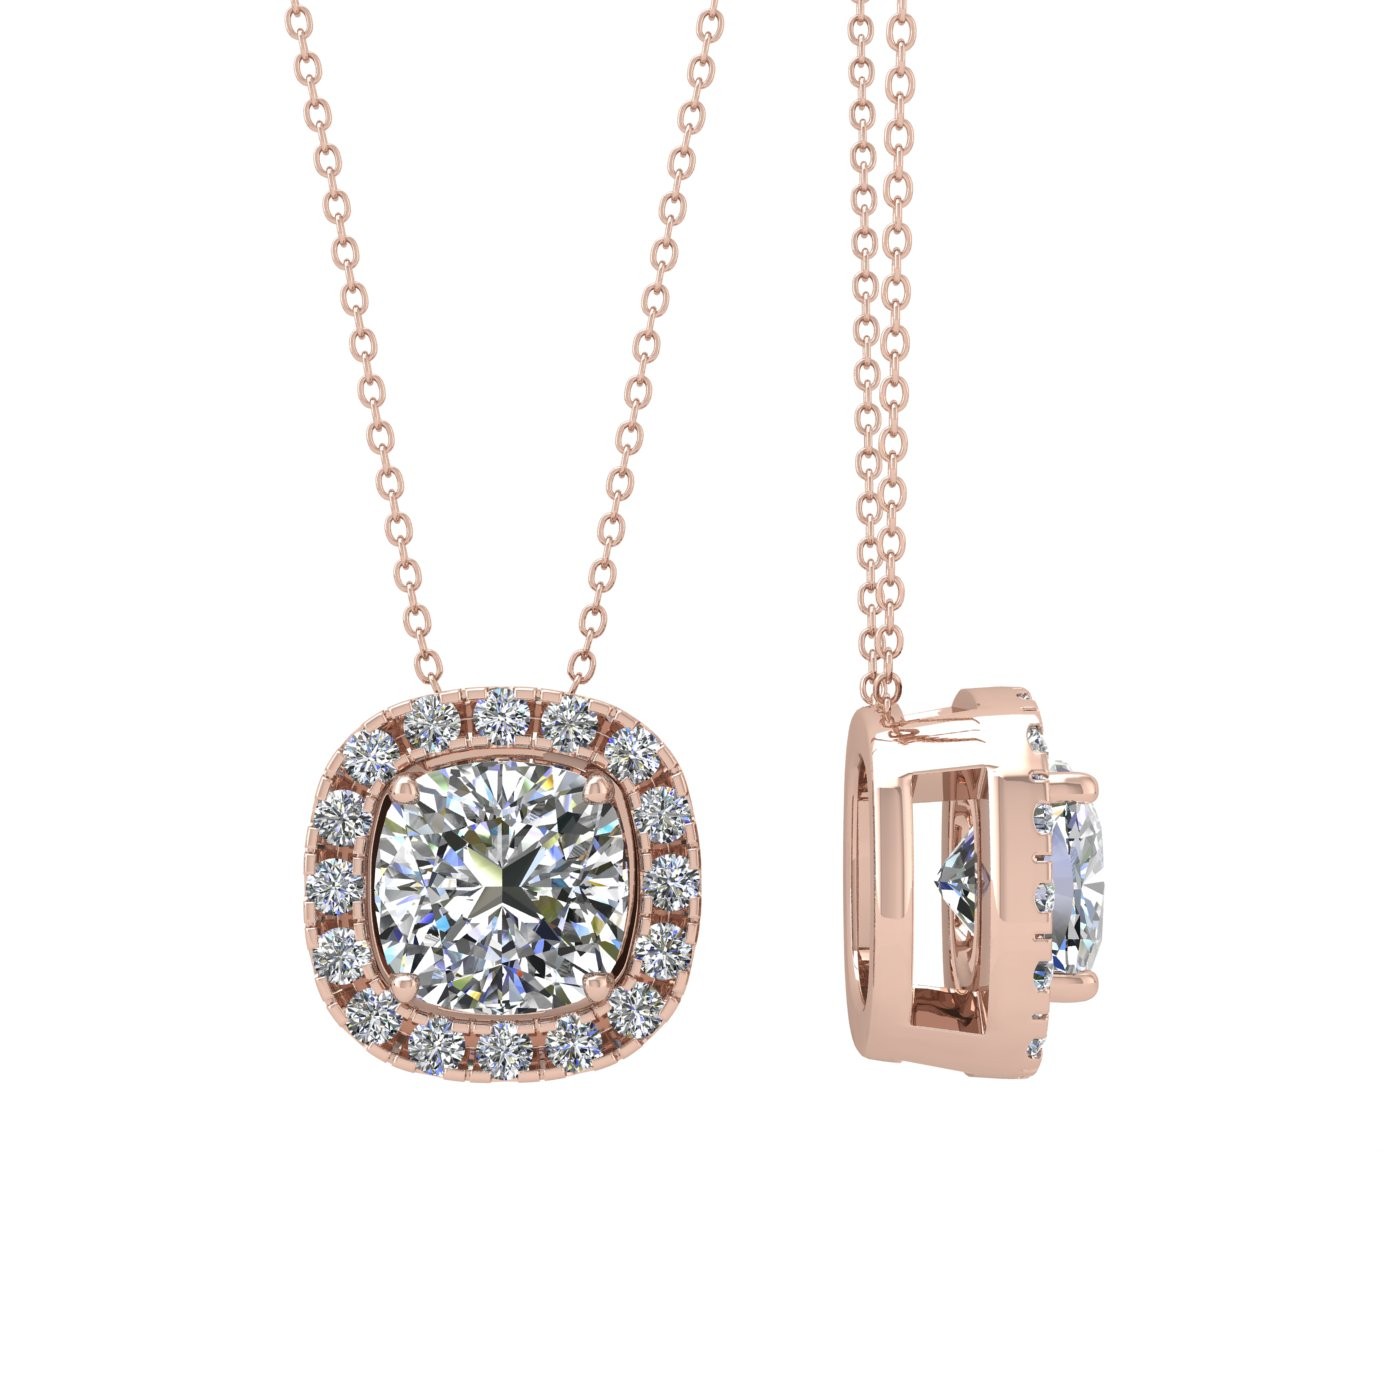 18k rose gold  1,2 ct 4 prongs cushion shape diamond pendant with diamond pavÉ set halo